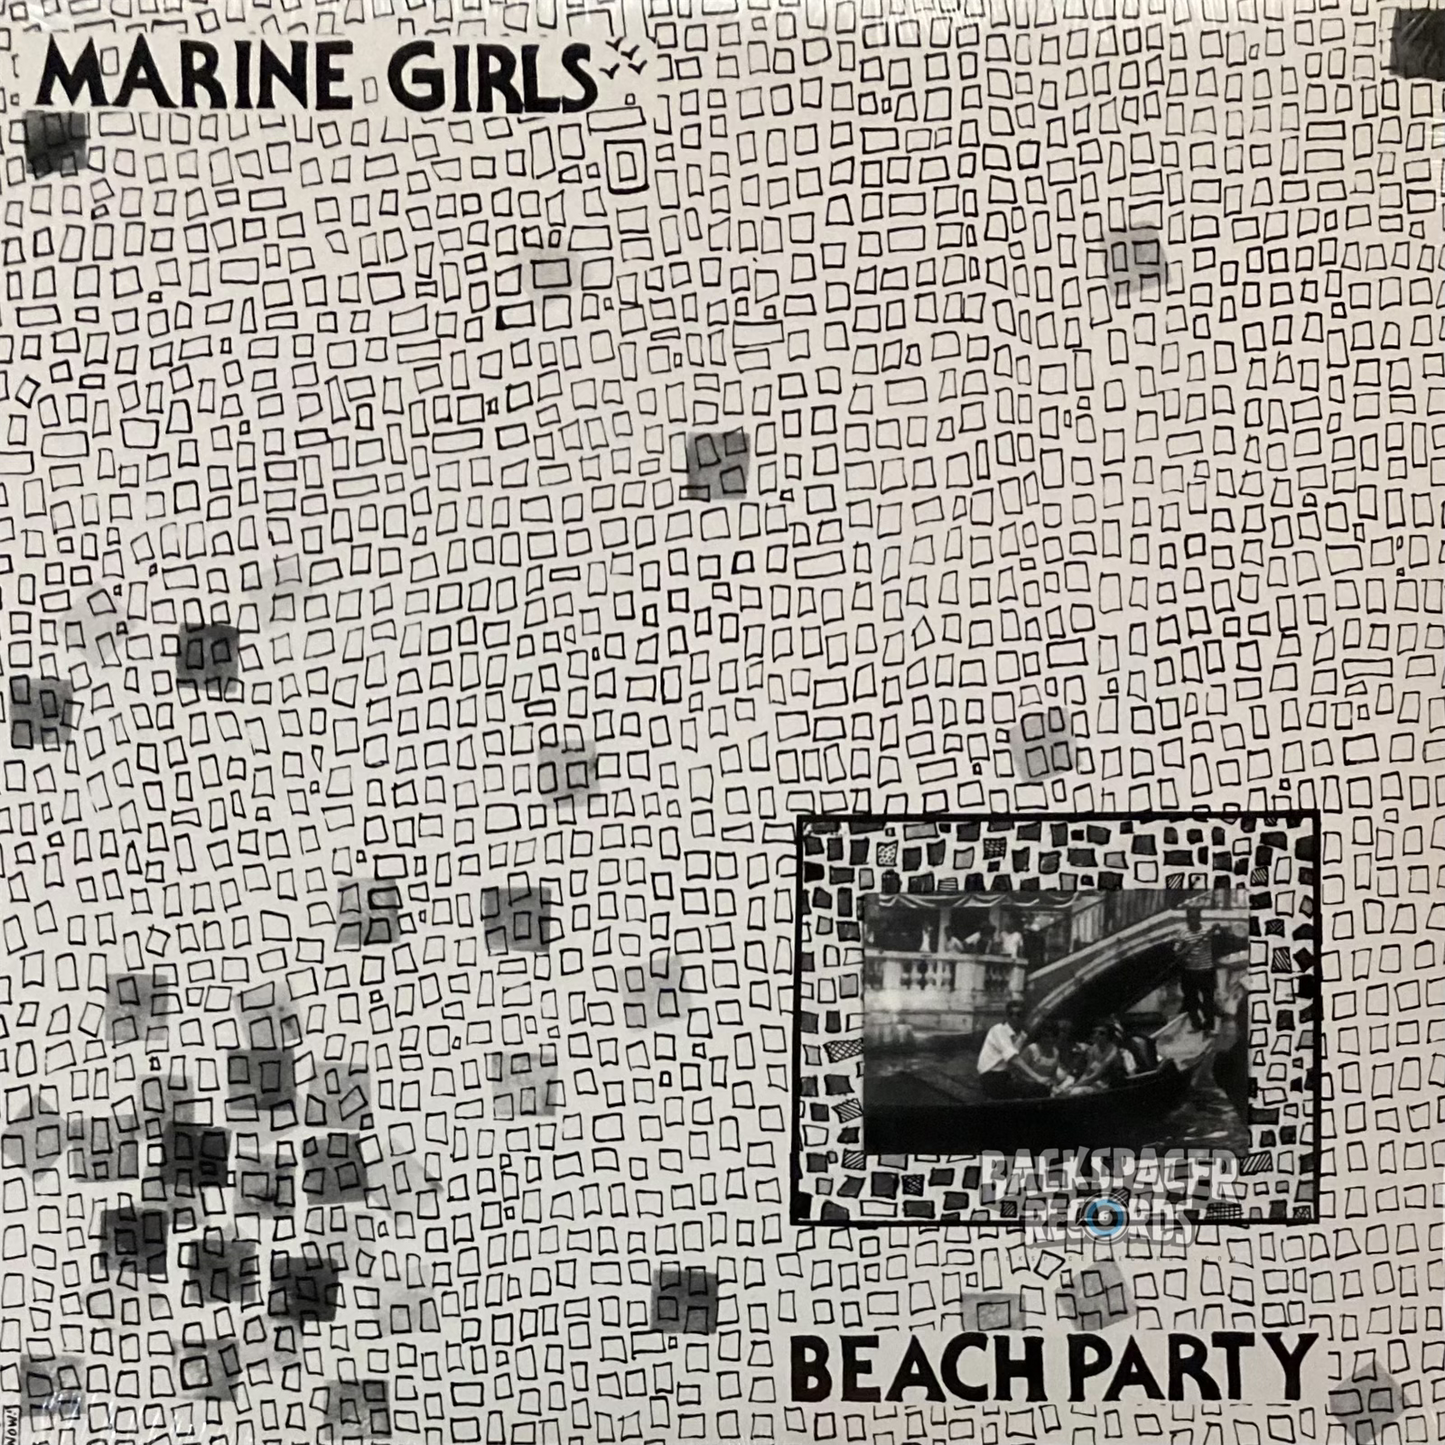 Marine Girls - Beach Party LP (Sealed)